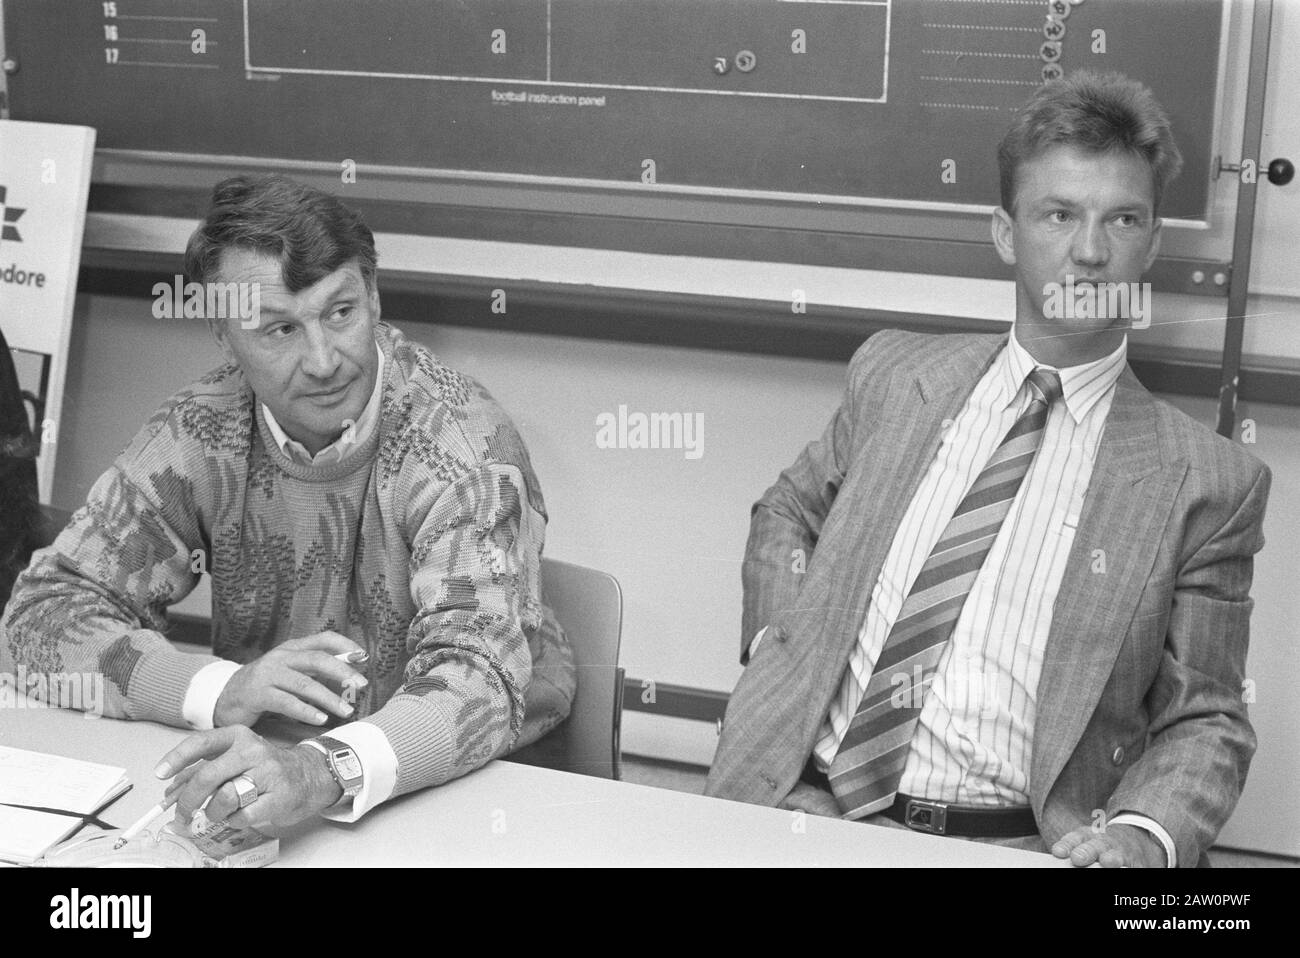 New coaches Ajax after leaving Linder; Antoine Kohn and assistant Louis van Gaal Date: September 22, 1988 Keywords: TRAINERS, sport, football Person Name: Gaal Louis, Kohn, Spitz Stock Photo